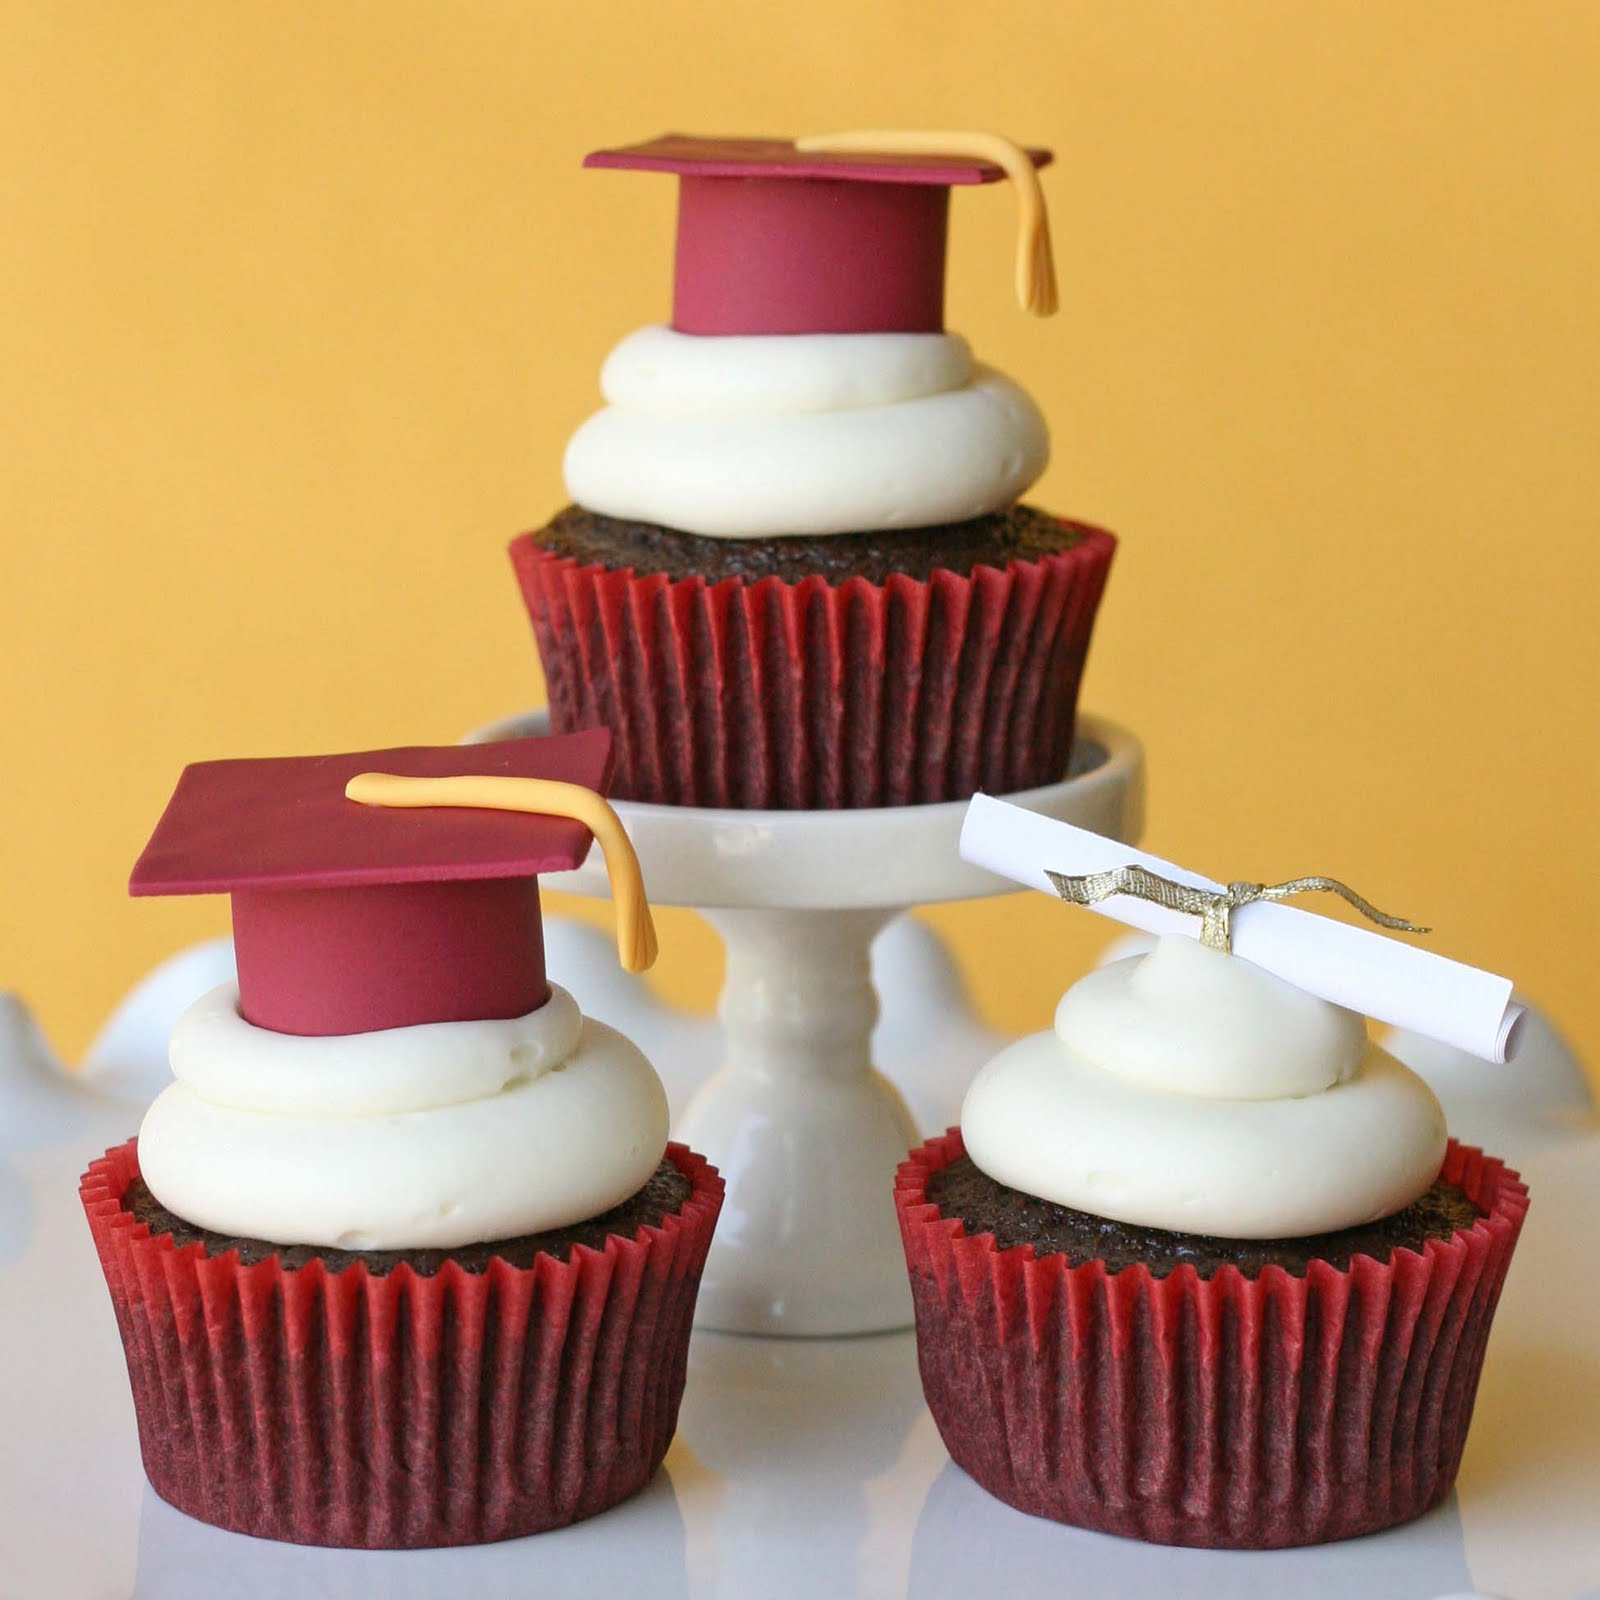 Graduation Cap Cupcakes
 Graduation Cupcakes and How To Make Fondant Graduation